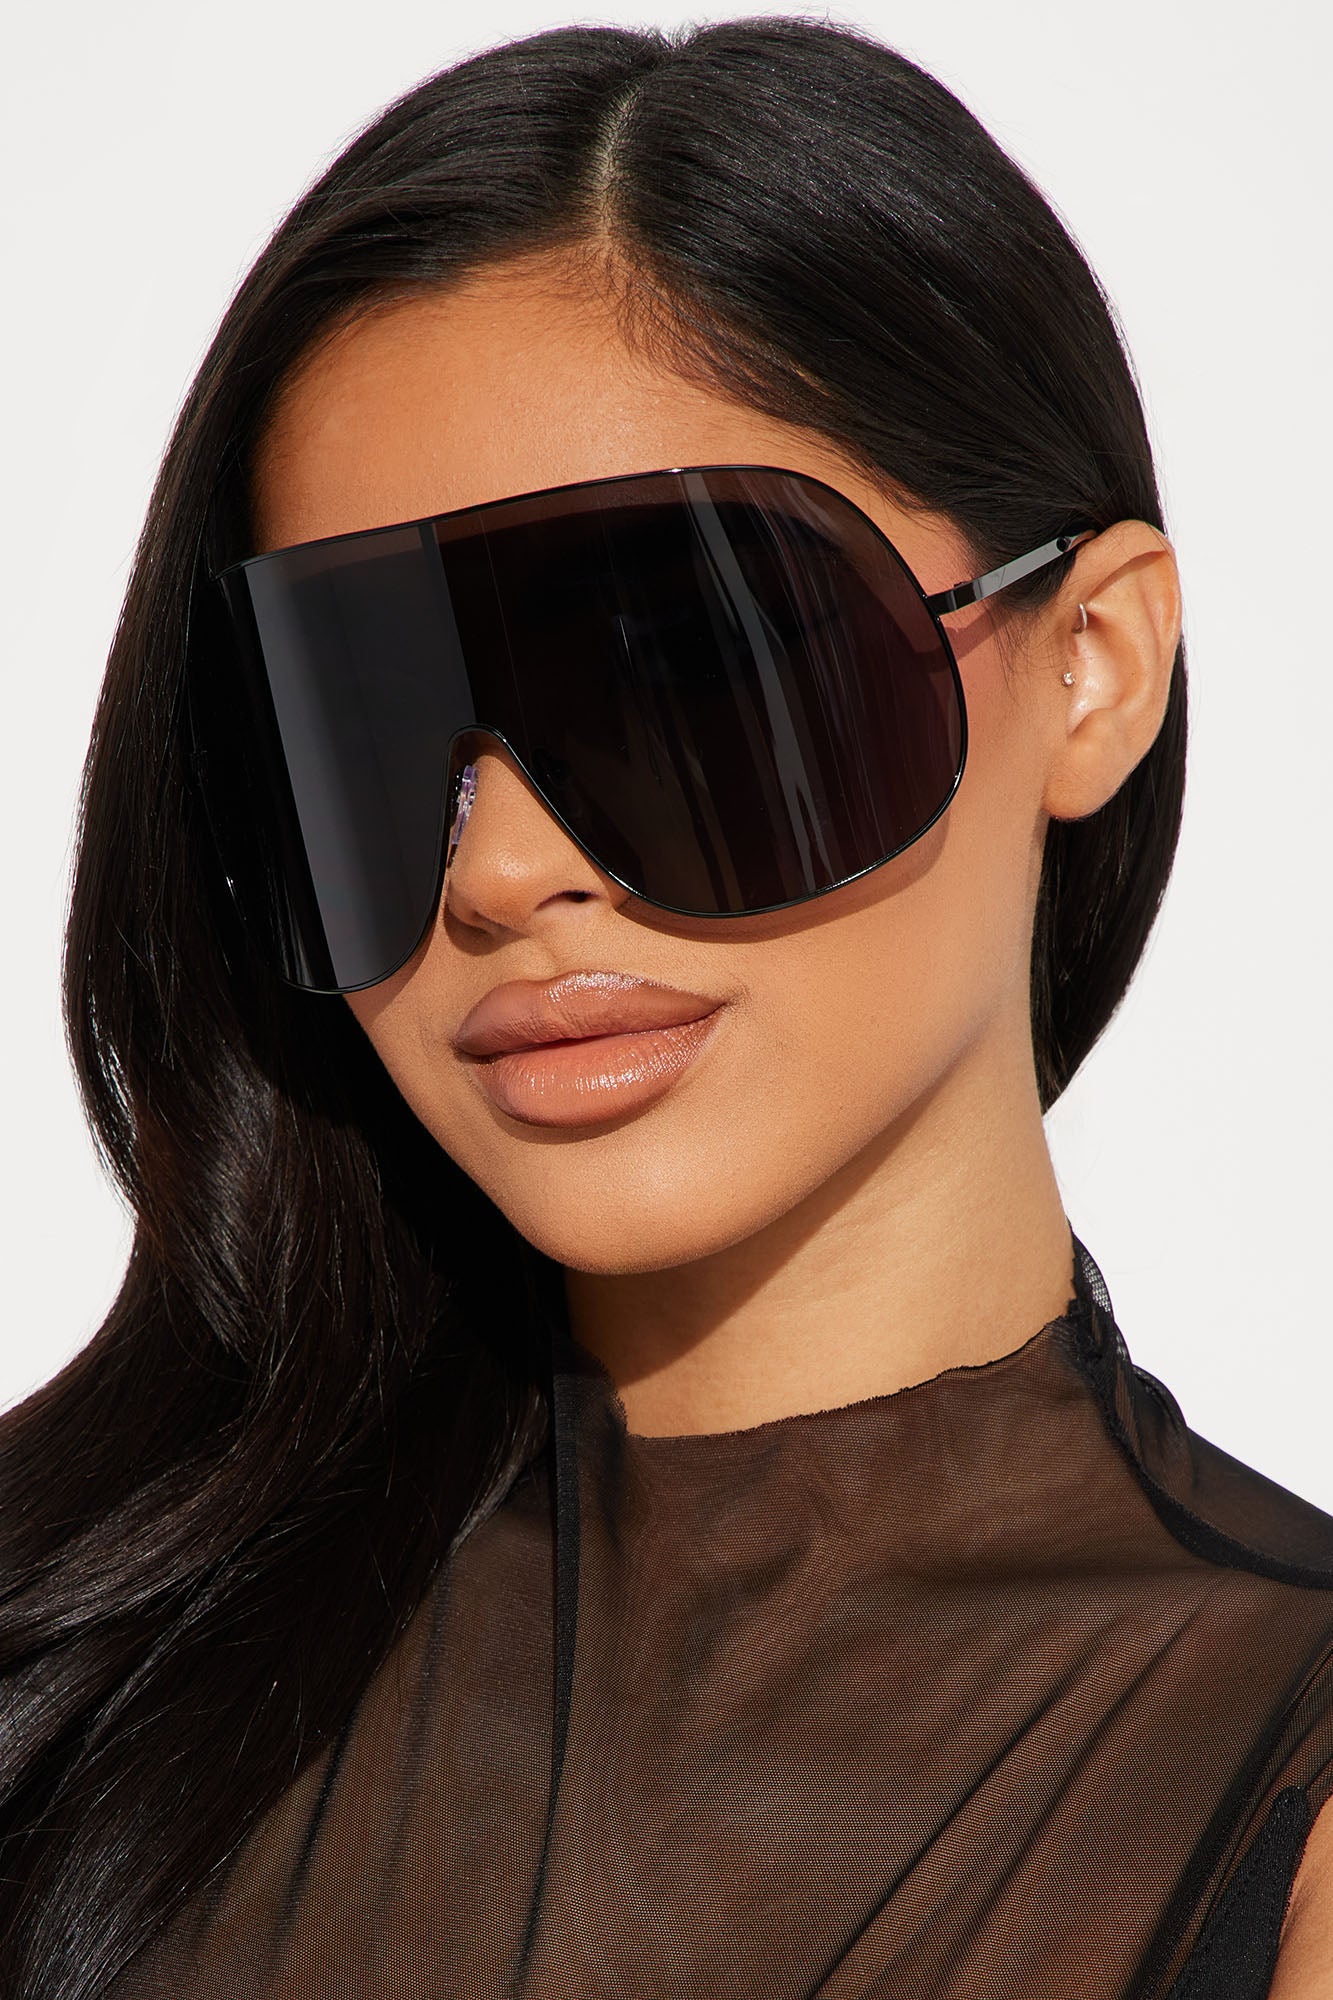 Can't See You Anymore Sunglasses - Black, Fashion Nova, Sunglasses